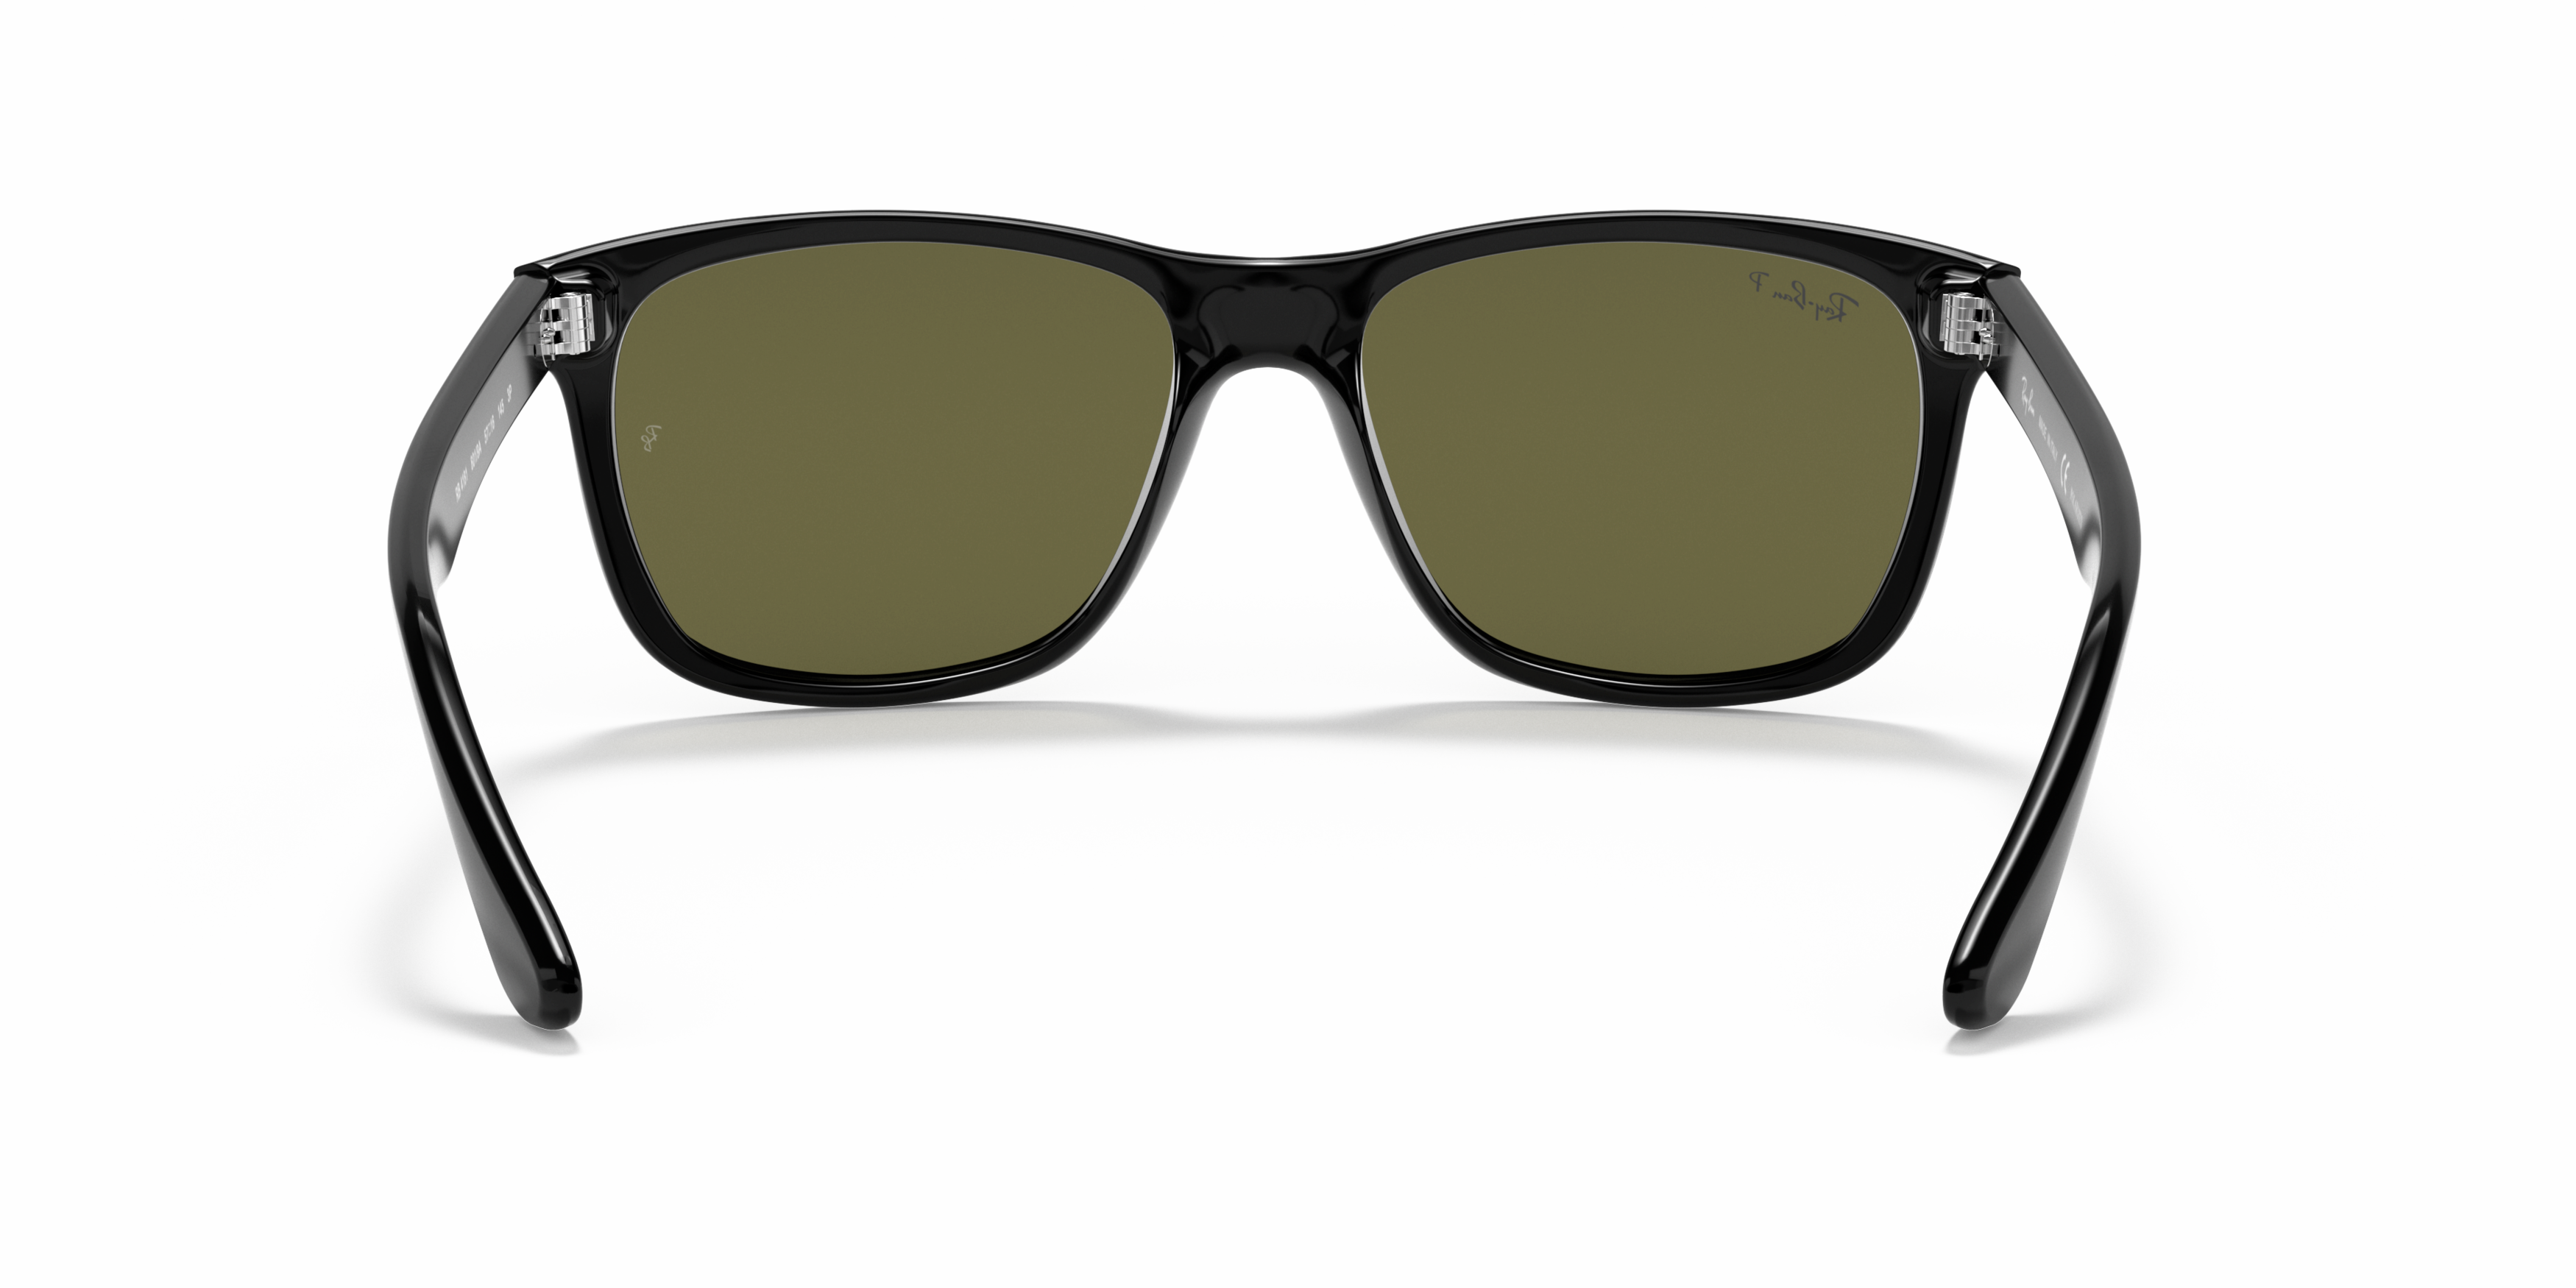 Detail02 Ray-Ban RB 4181 Sunglasses Green / Black